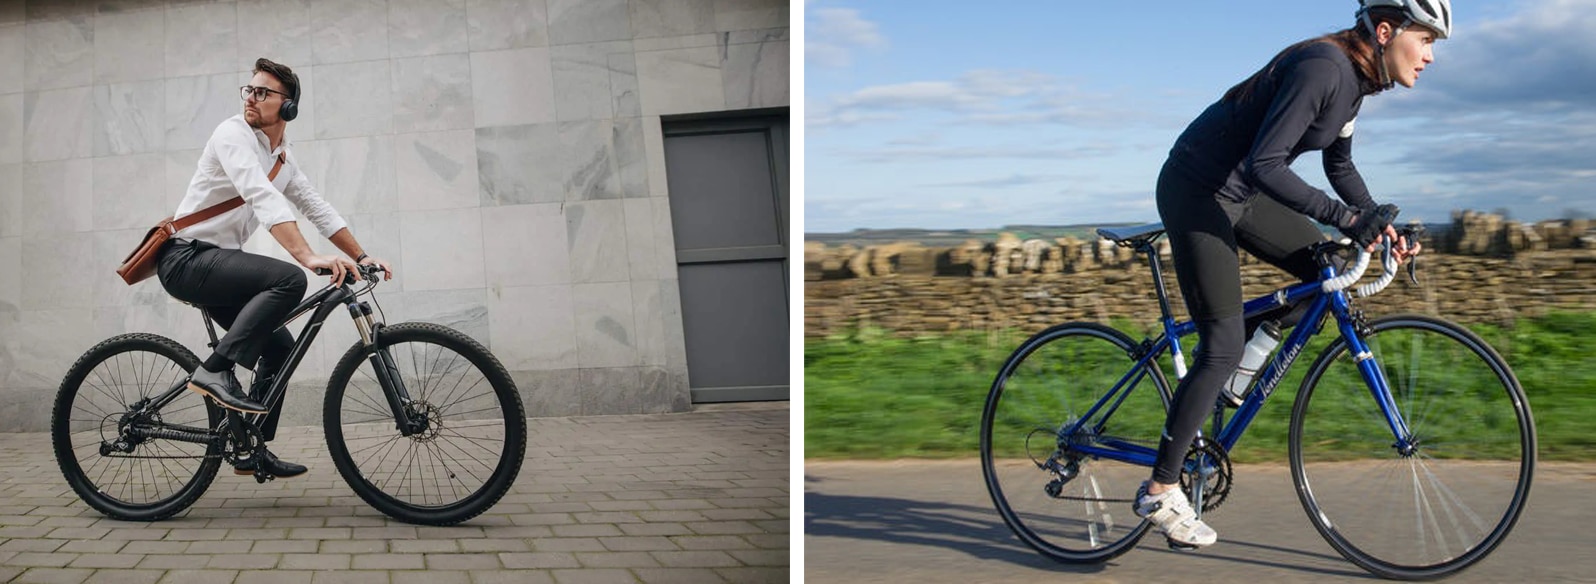 Commuter Bike vs. Road Bike – Debating the Daily Use Options